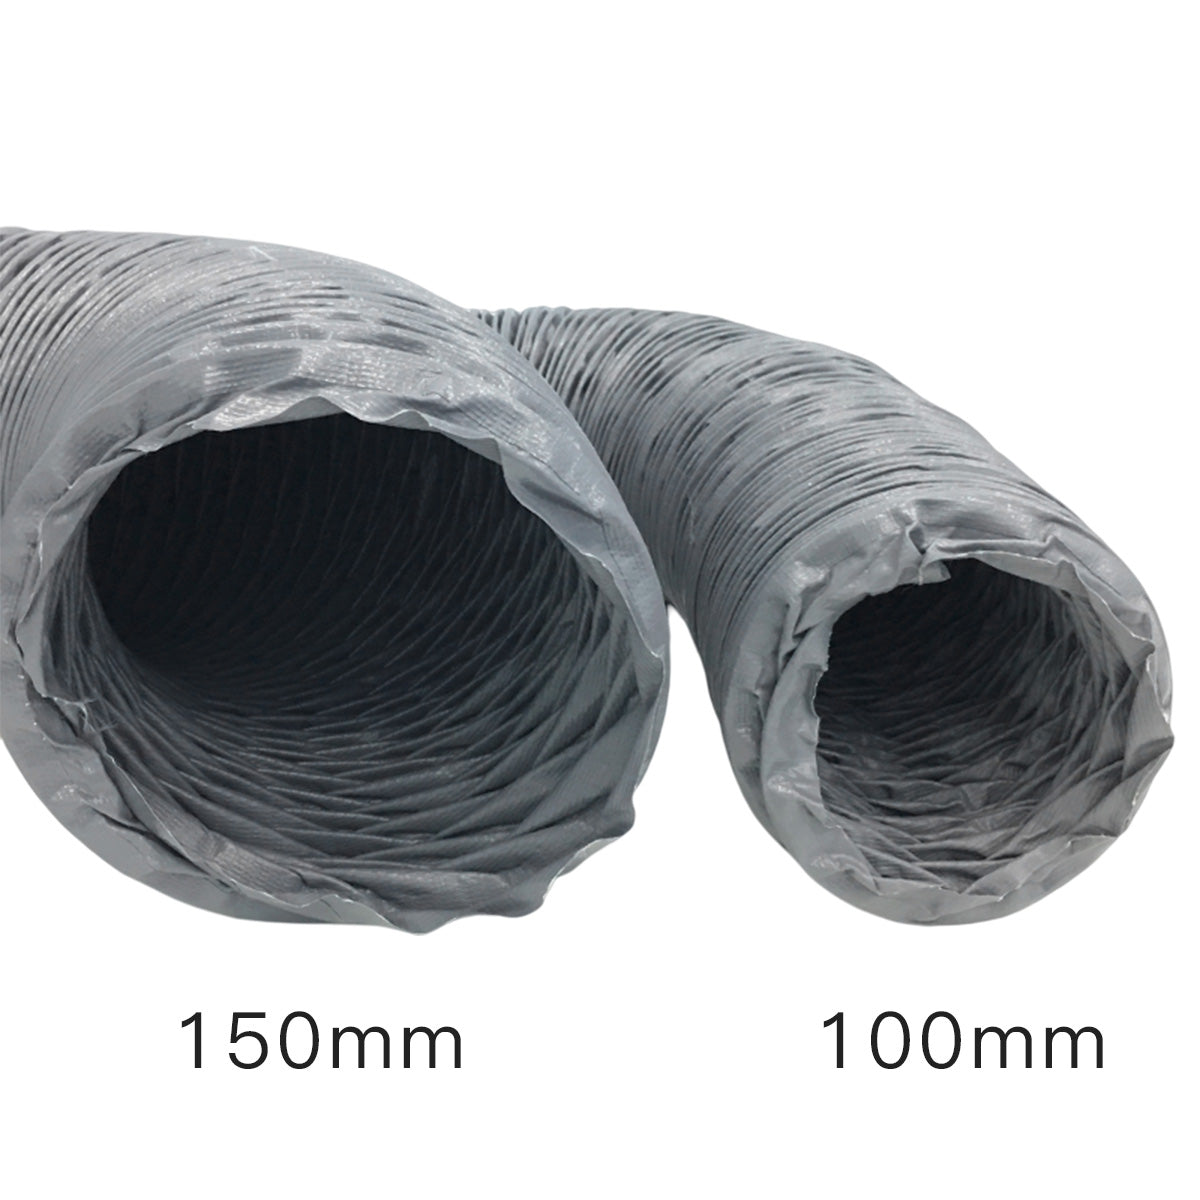 Startnow 3m/Lot Dia.100mm Flexible Vent Duct Nylon Fabric Ventilation Pipe Ventilator Hose Plastic Canvas Tube